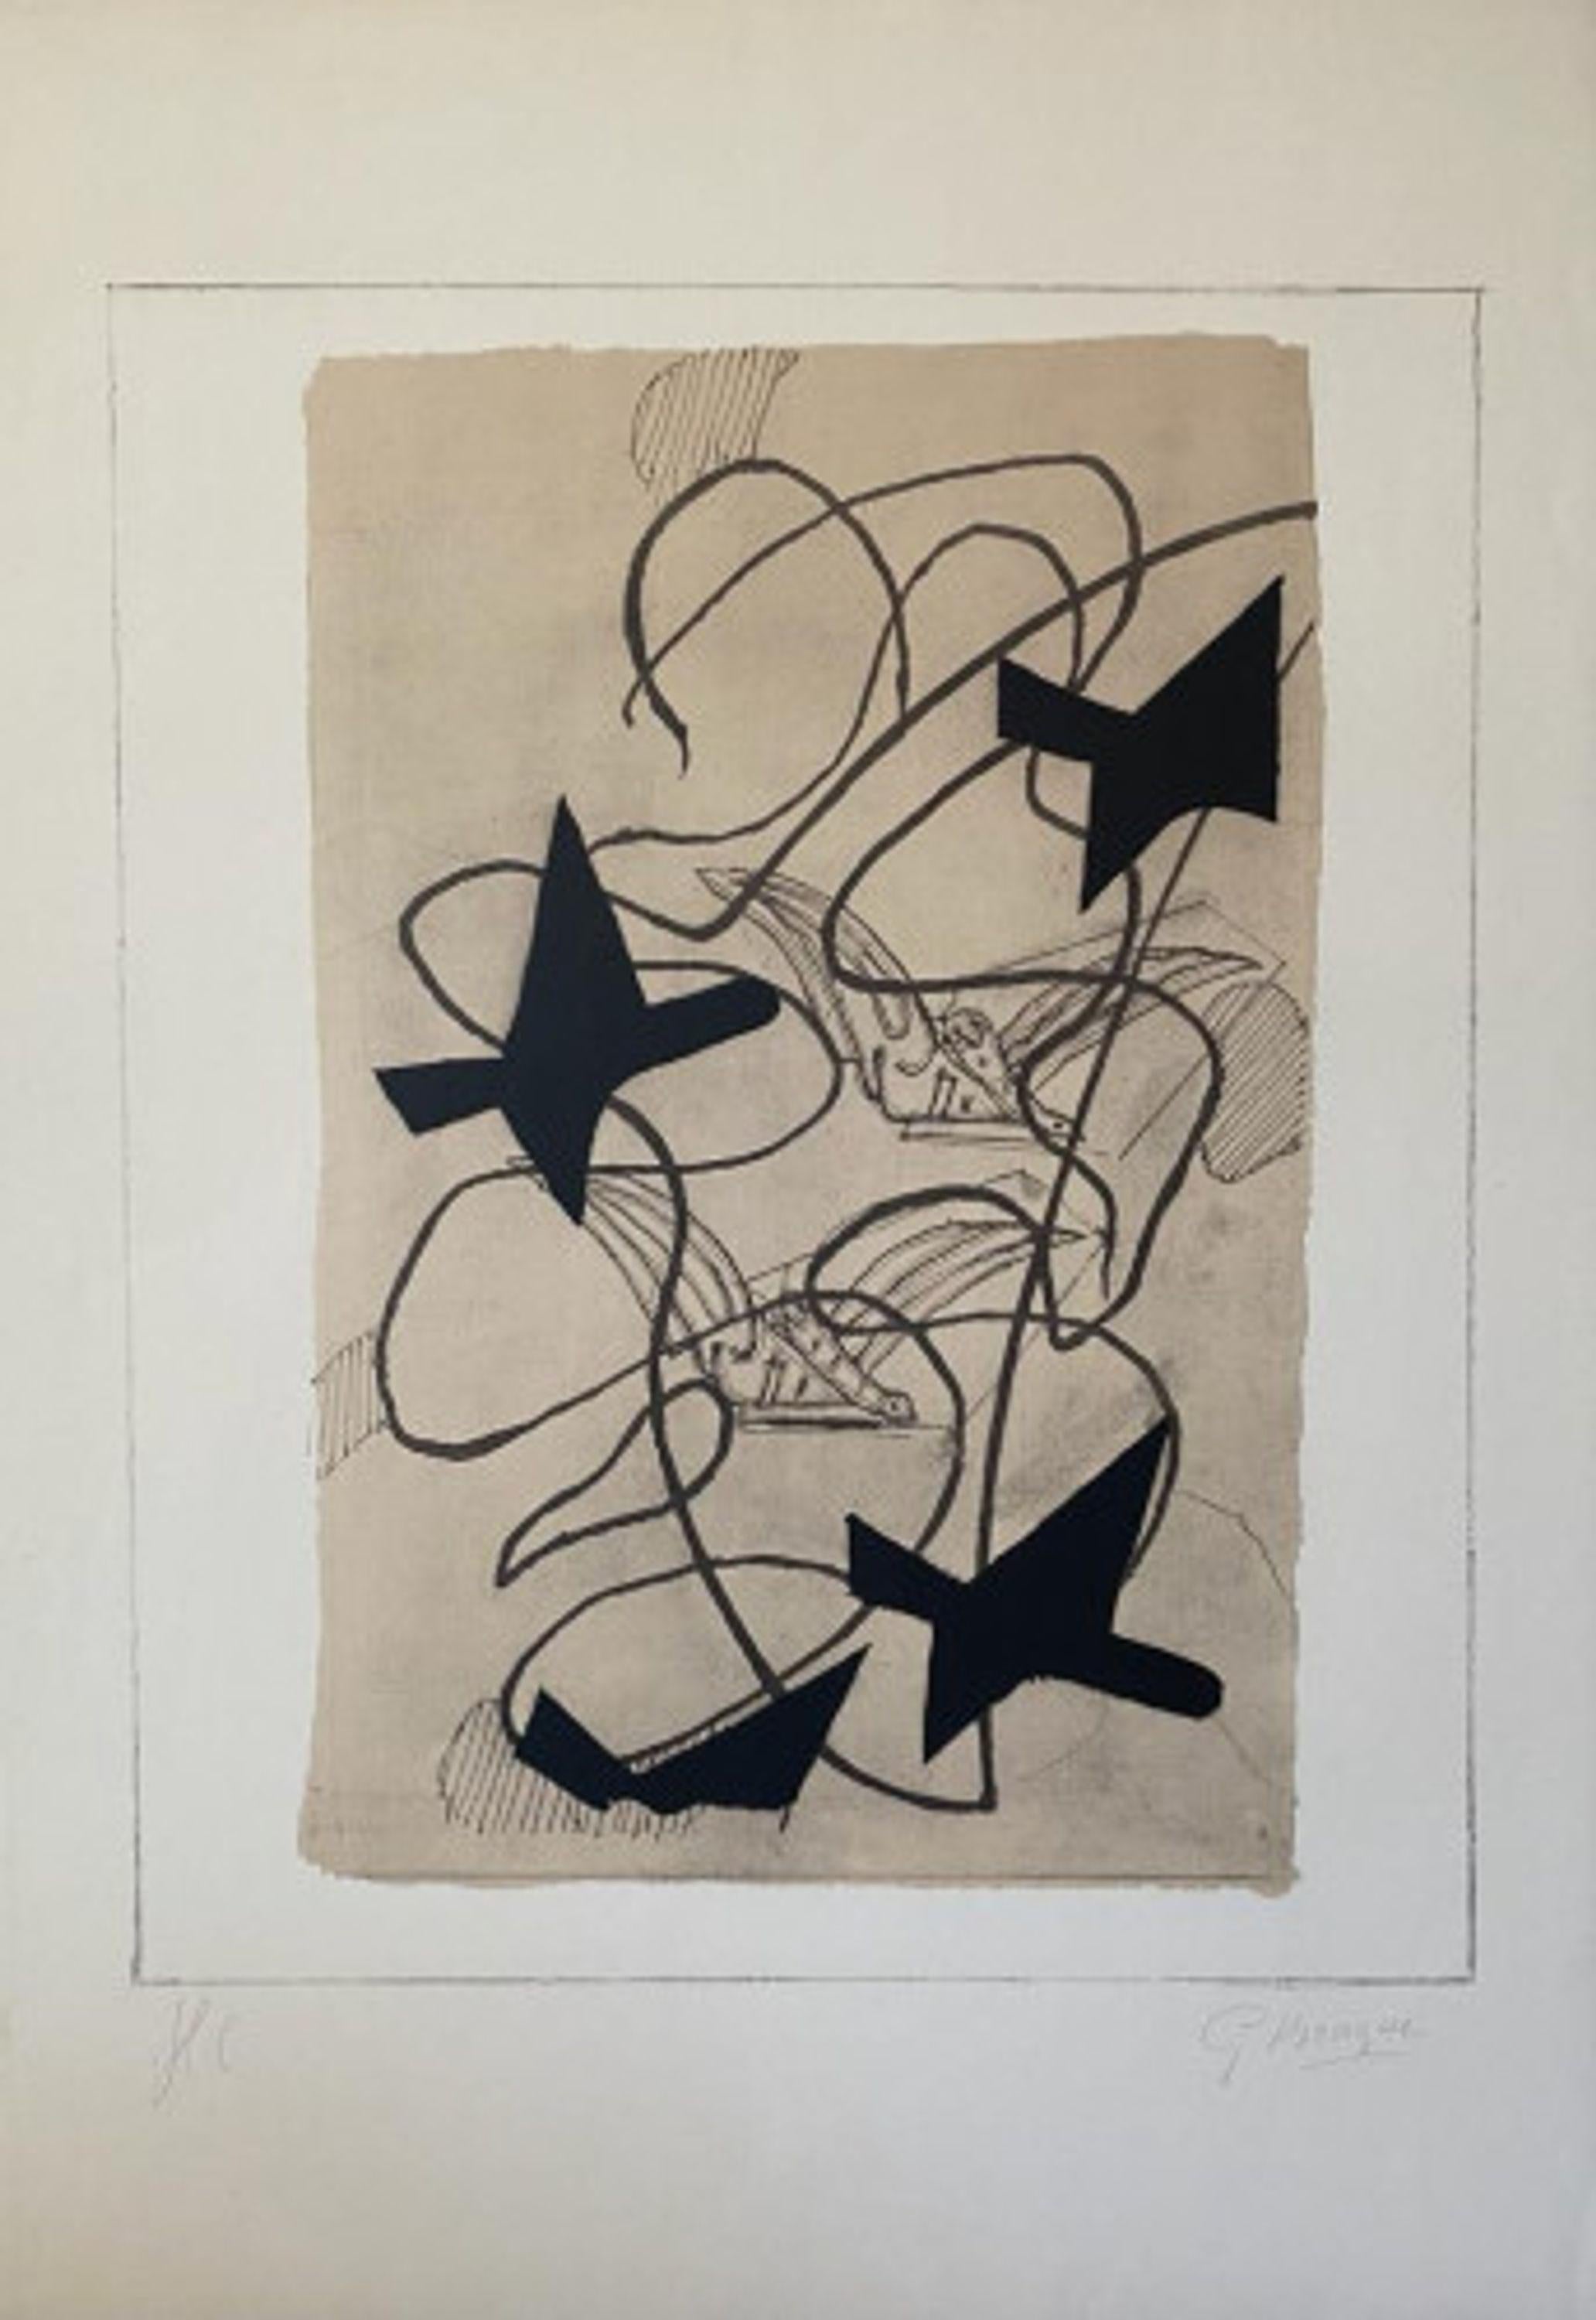 L'envol - Print by Georges Braque